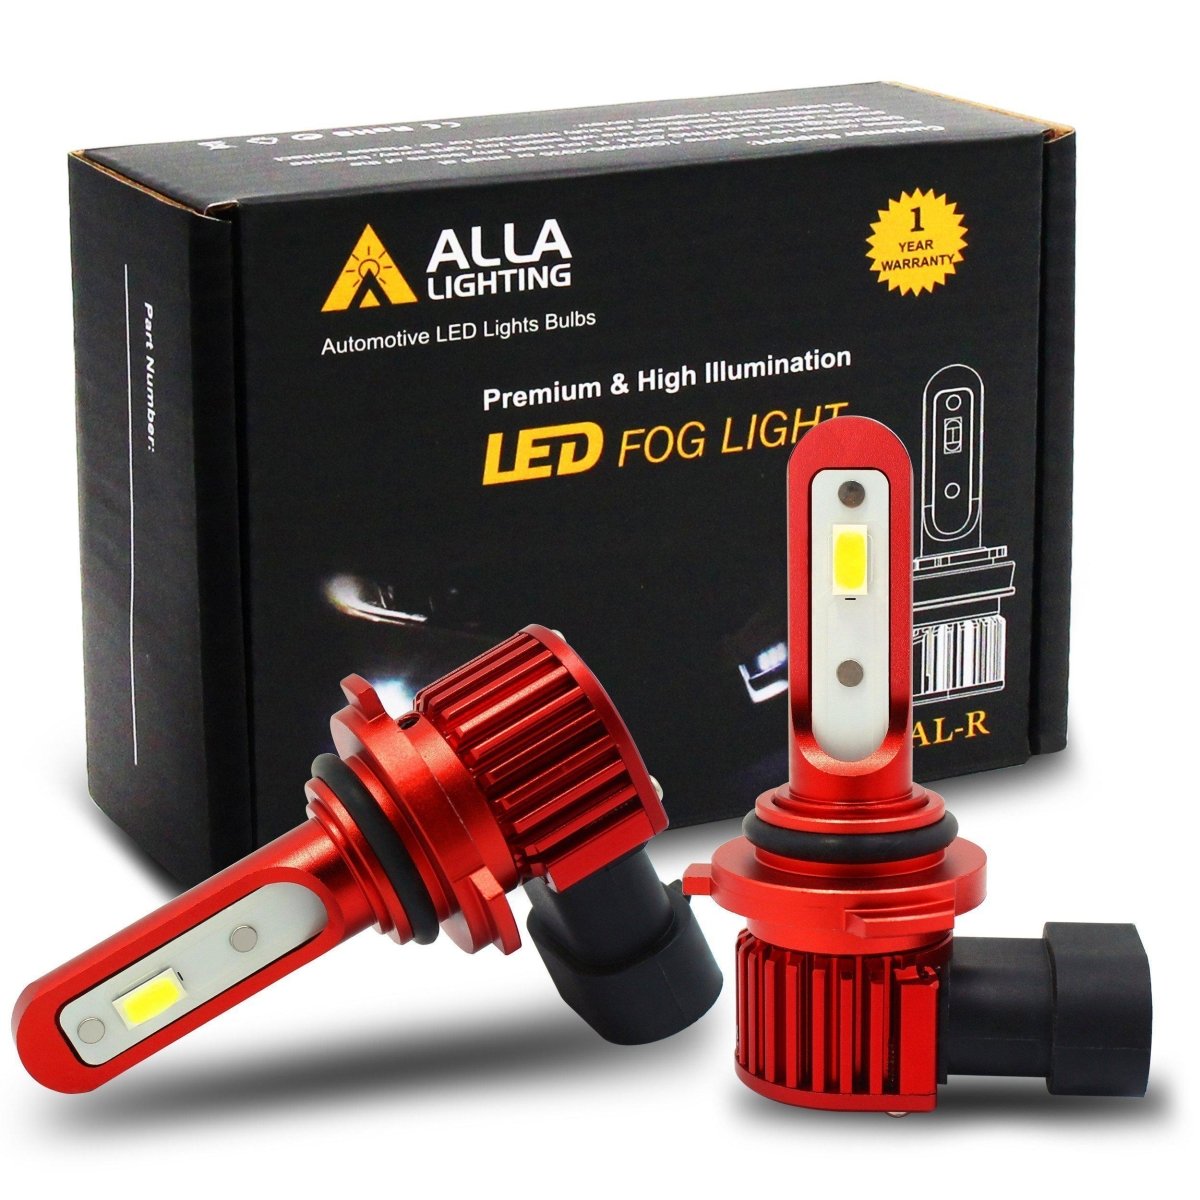 AL-R HB4 9006 LED Fog Lights Bulbs Replacement for Cars Trucks -Alla Lighting